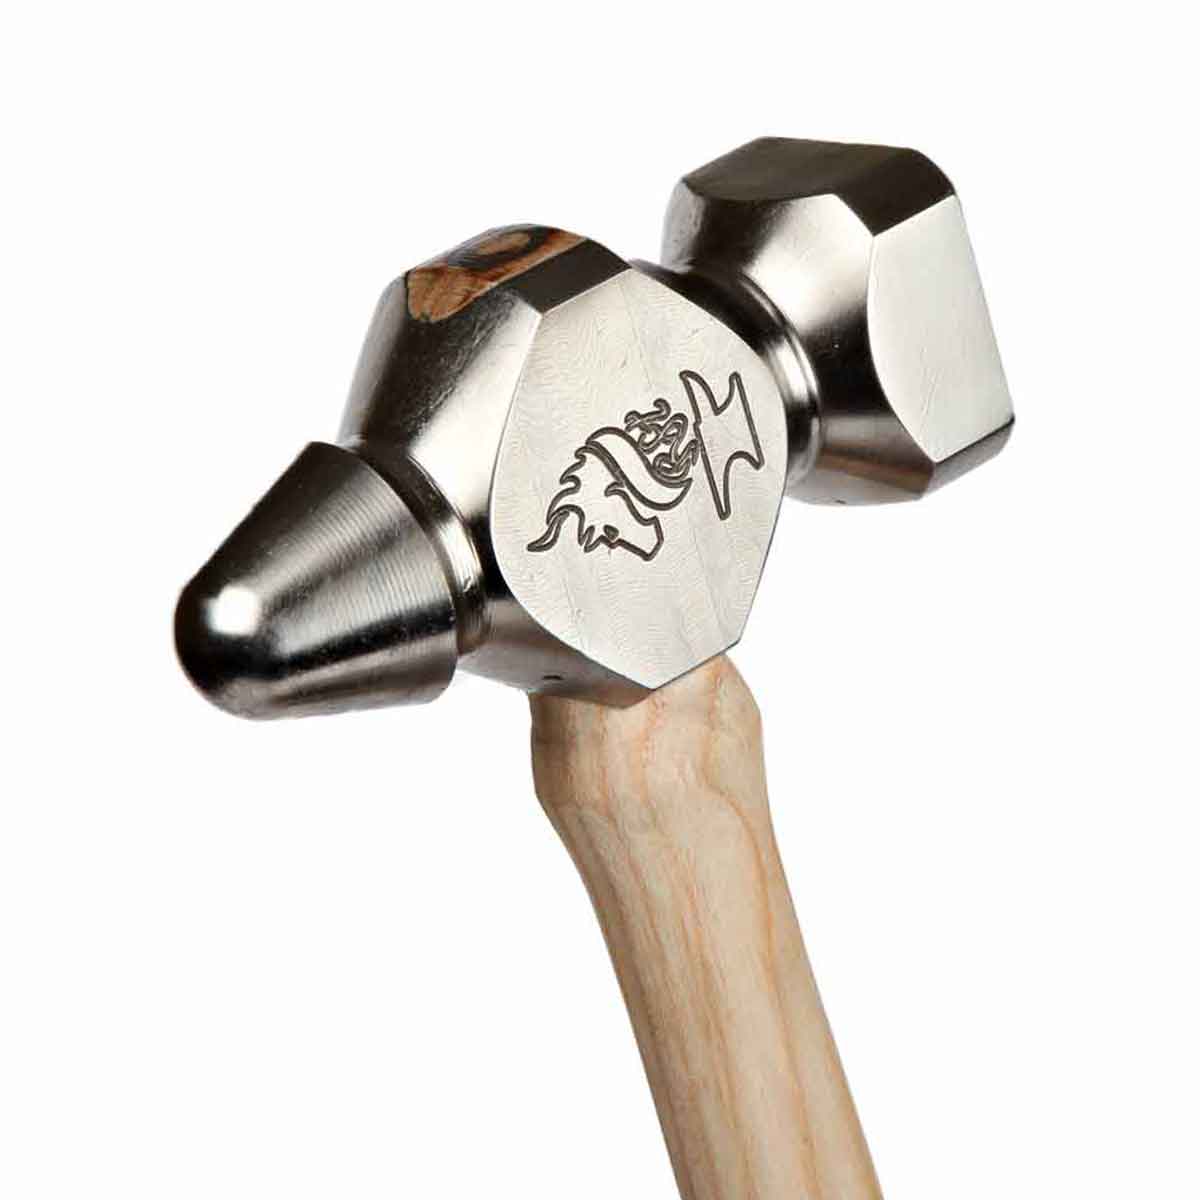 Jim Blurton Ball Pein Hammer